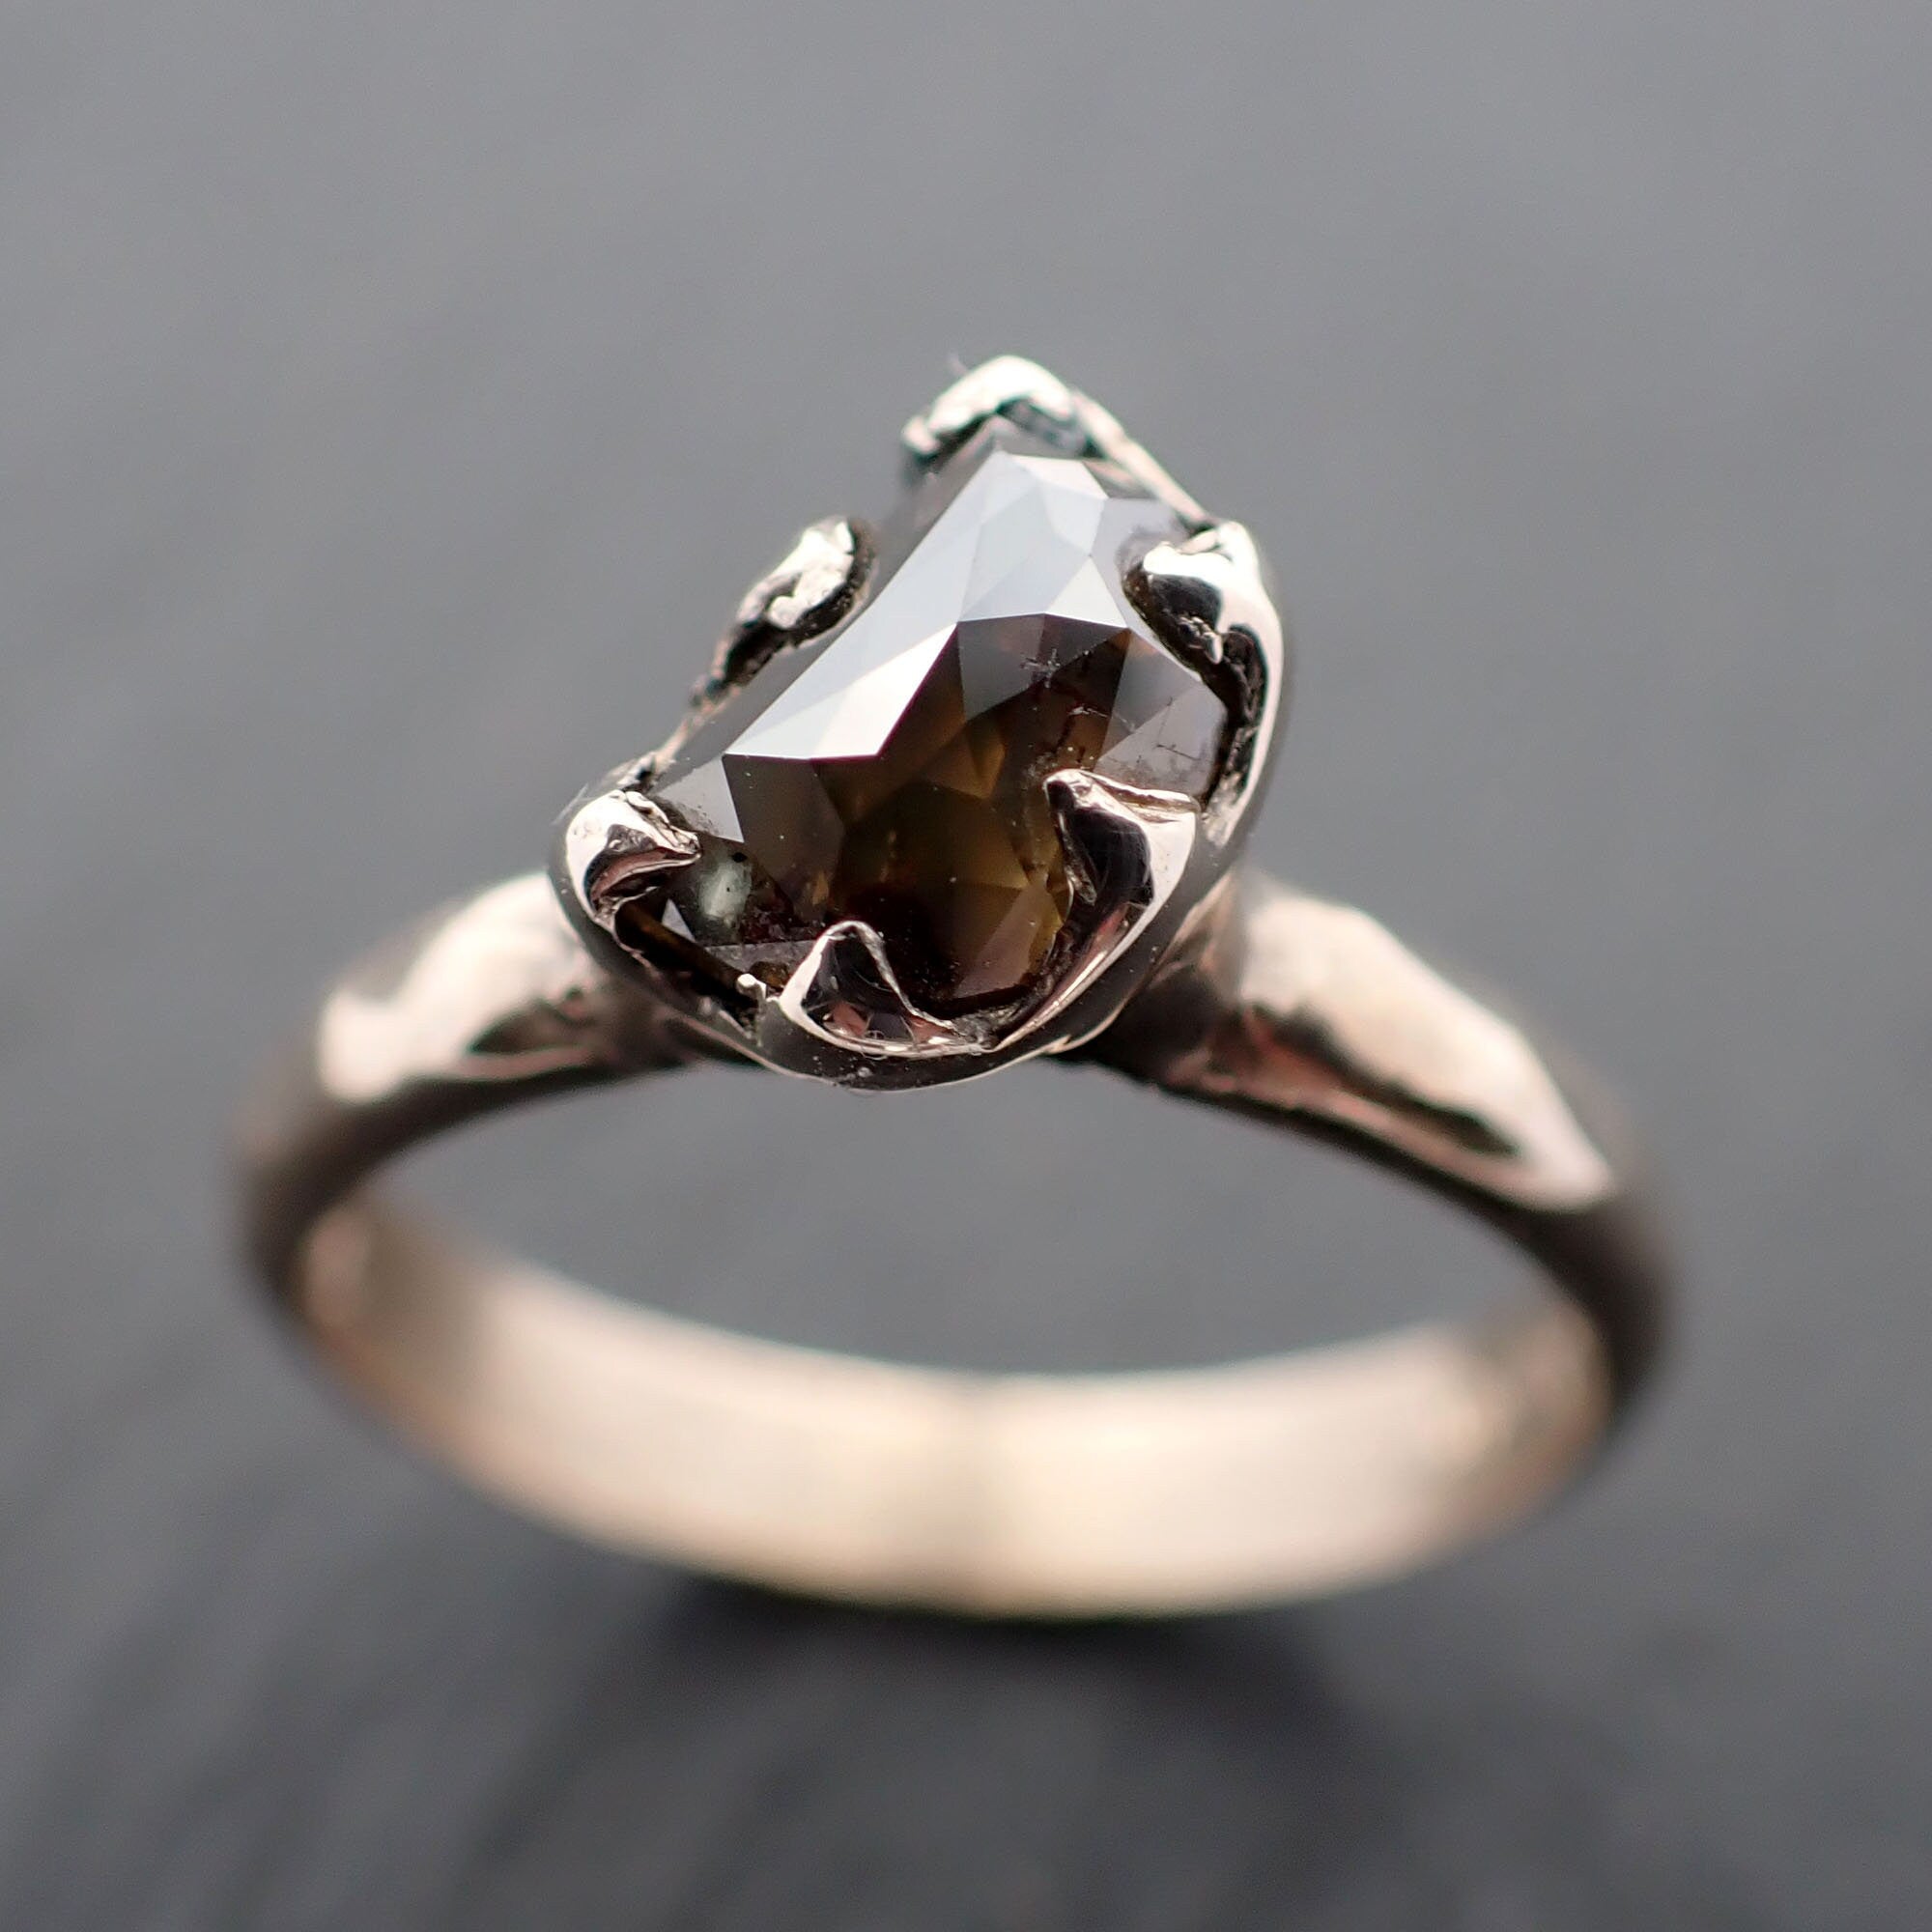 Fancy Cut Cognac Half Moon Diamond Solitaire Engagement 14k White Gold Wedding Ring byAngeline 3466